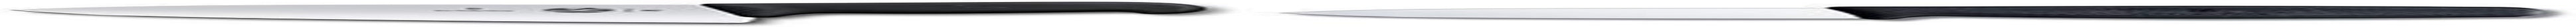 Fibrox Chef'S Knife, 8-Inch ,40520 ,47520 ,45520 ,5.2063.20 and  Swiss Army 3-1/4-Inch Fibrox Straight Edge Paring Knife, Black Bundle